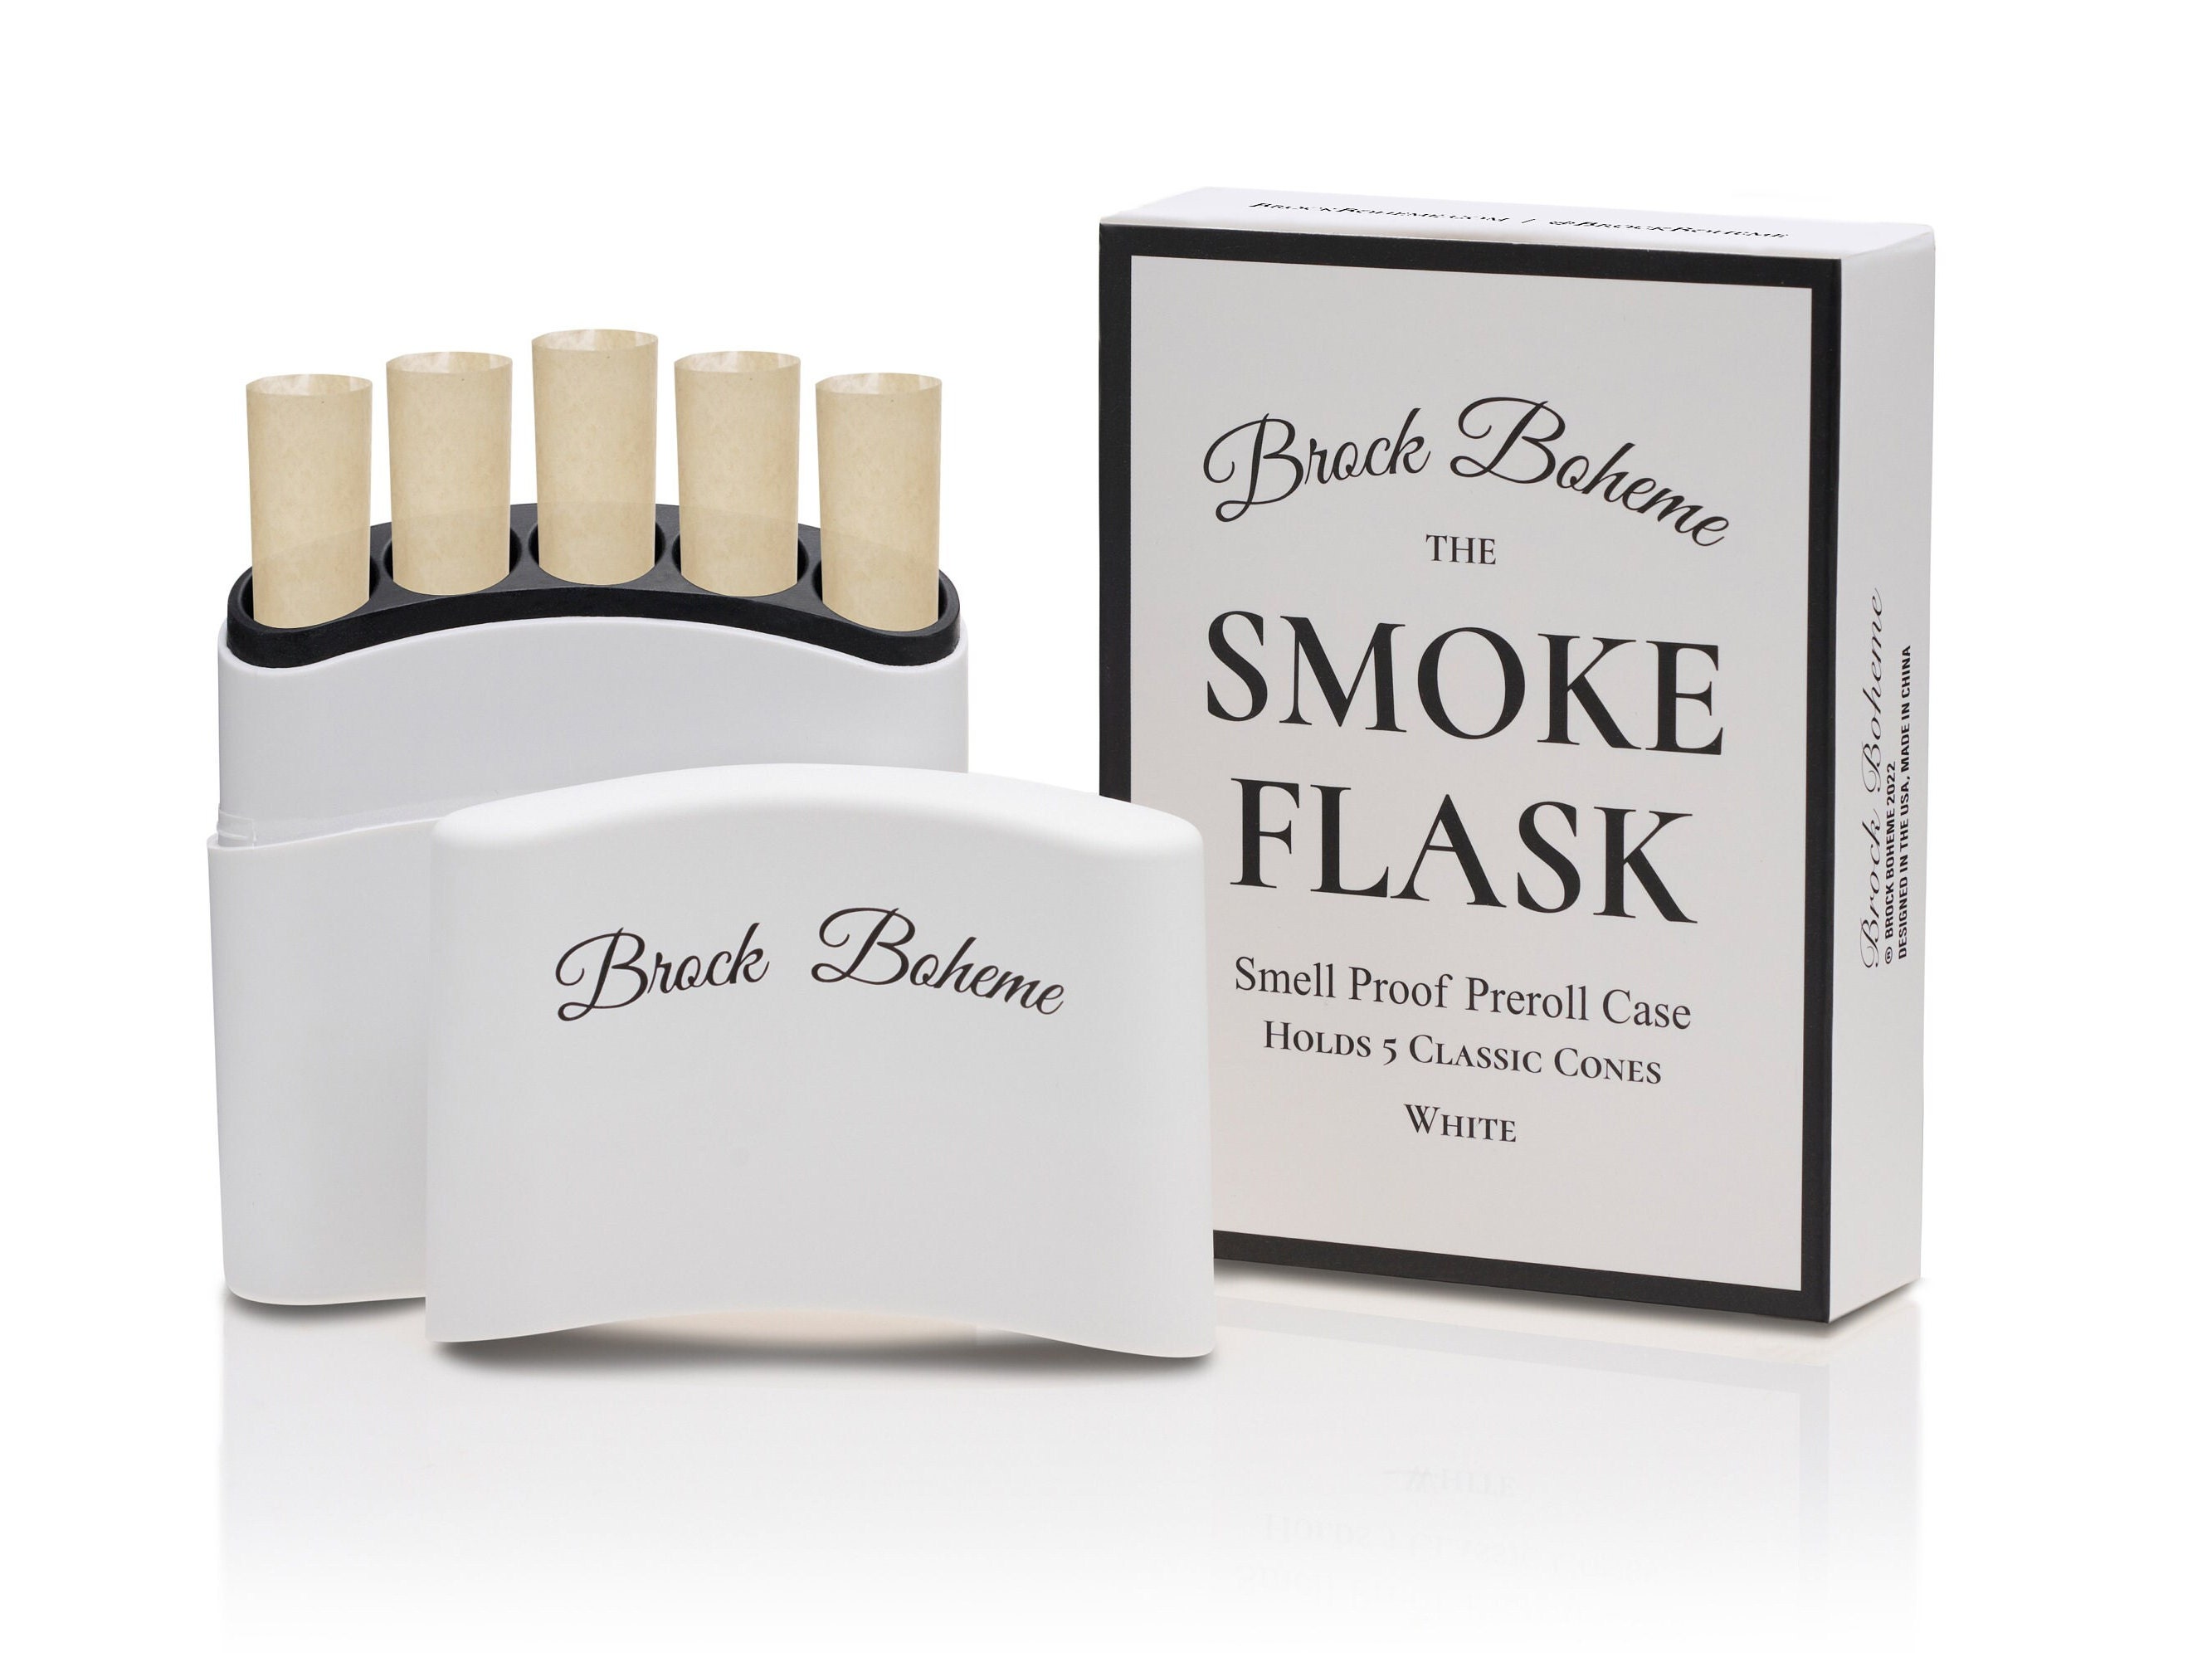 Smoking Menthol Filter Tubes, Standard Size, 100 Tubes per Box 5 boxe,  11,95 €